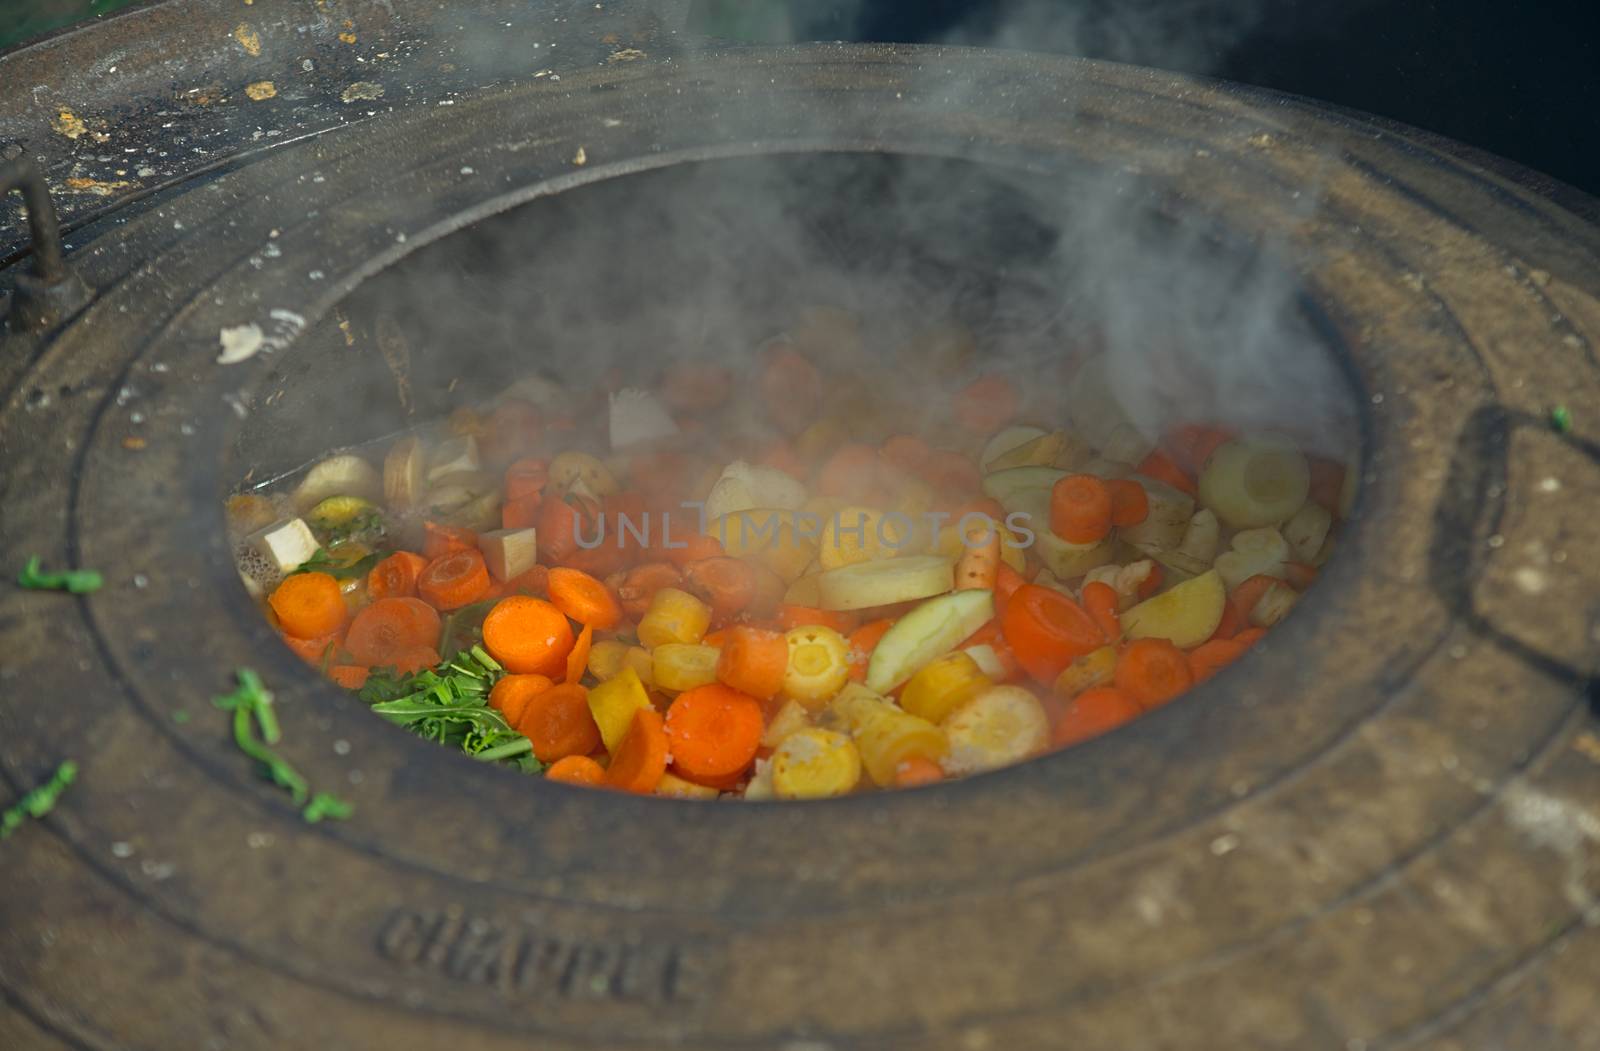 Medieval style cooking of various vegetables in big metal pot